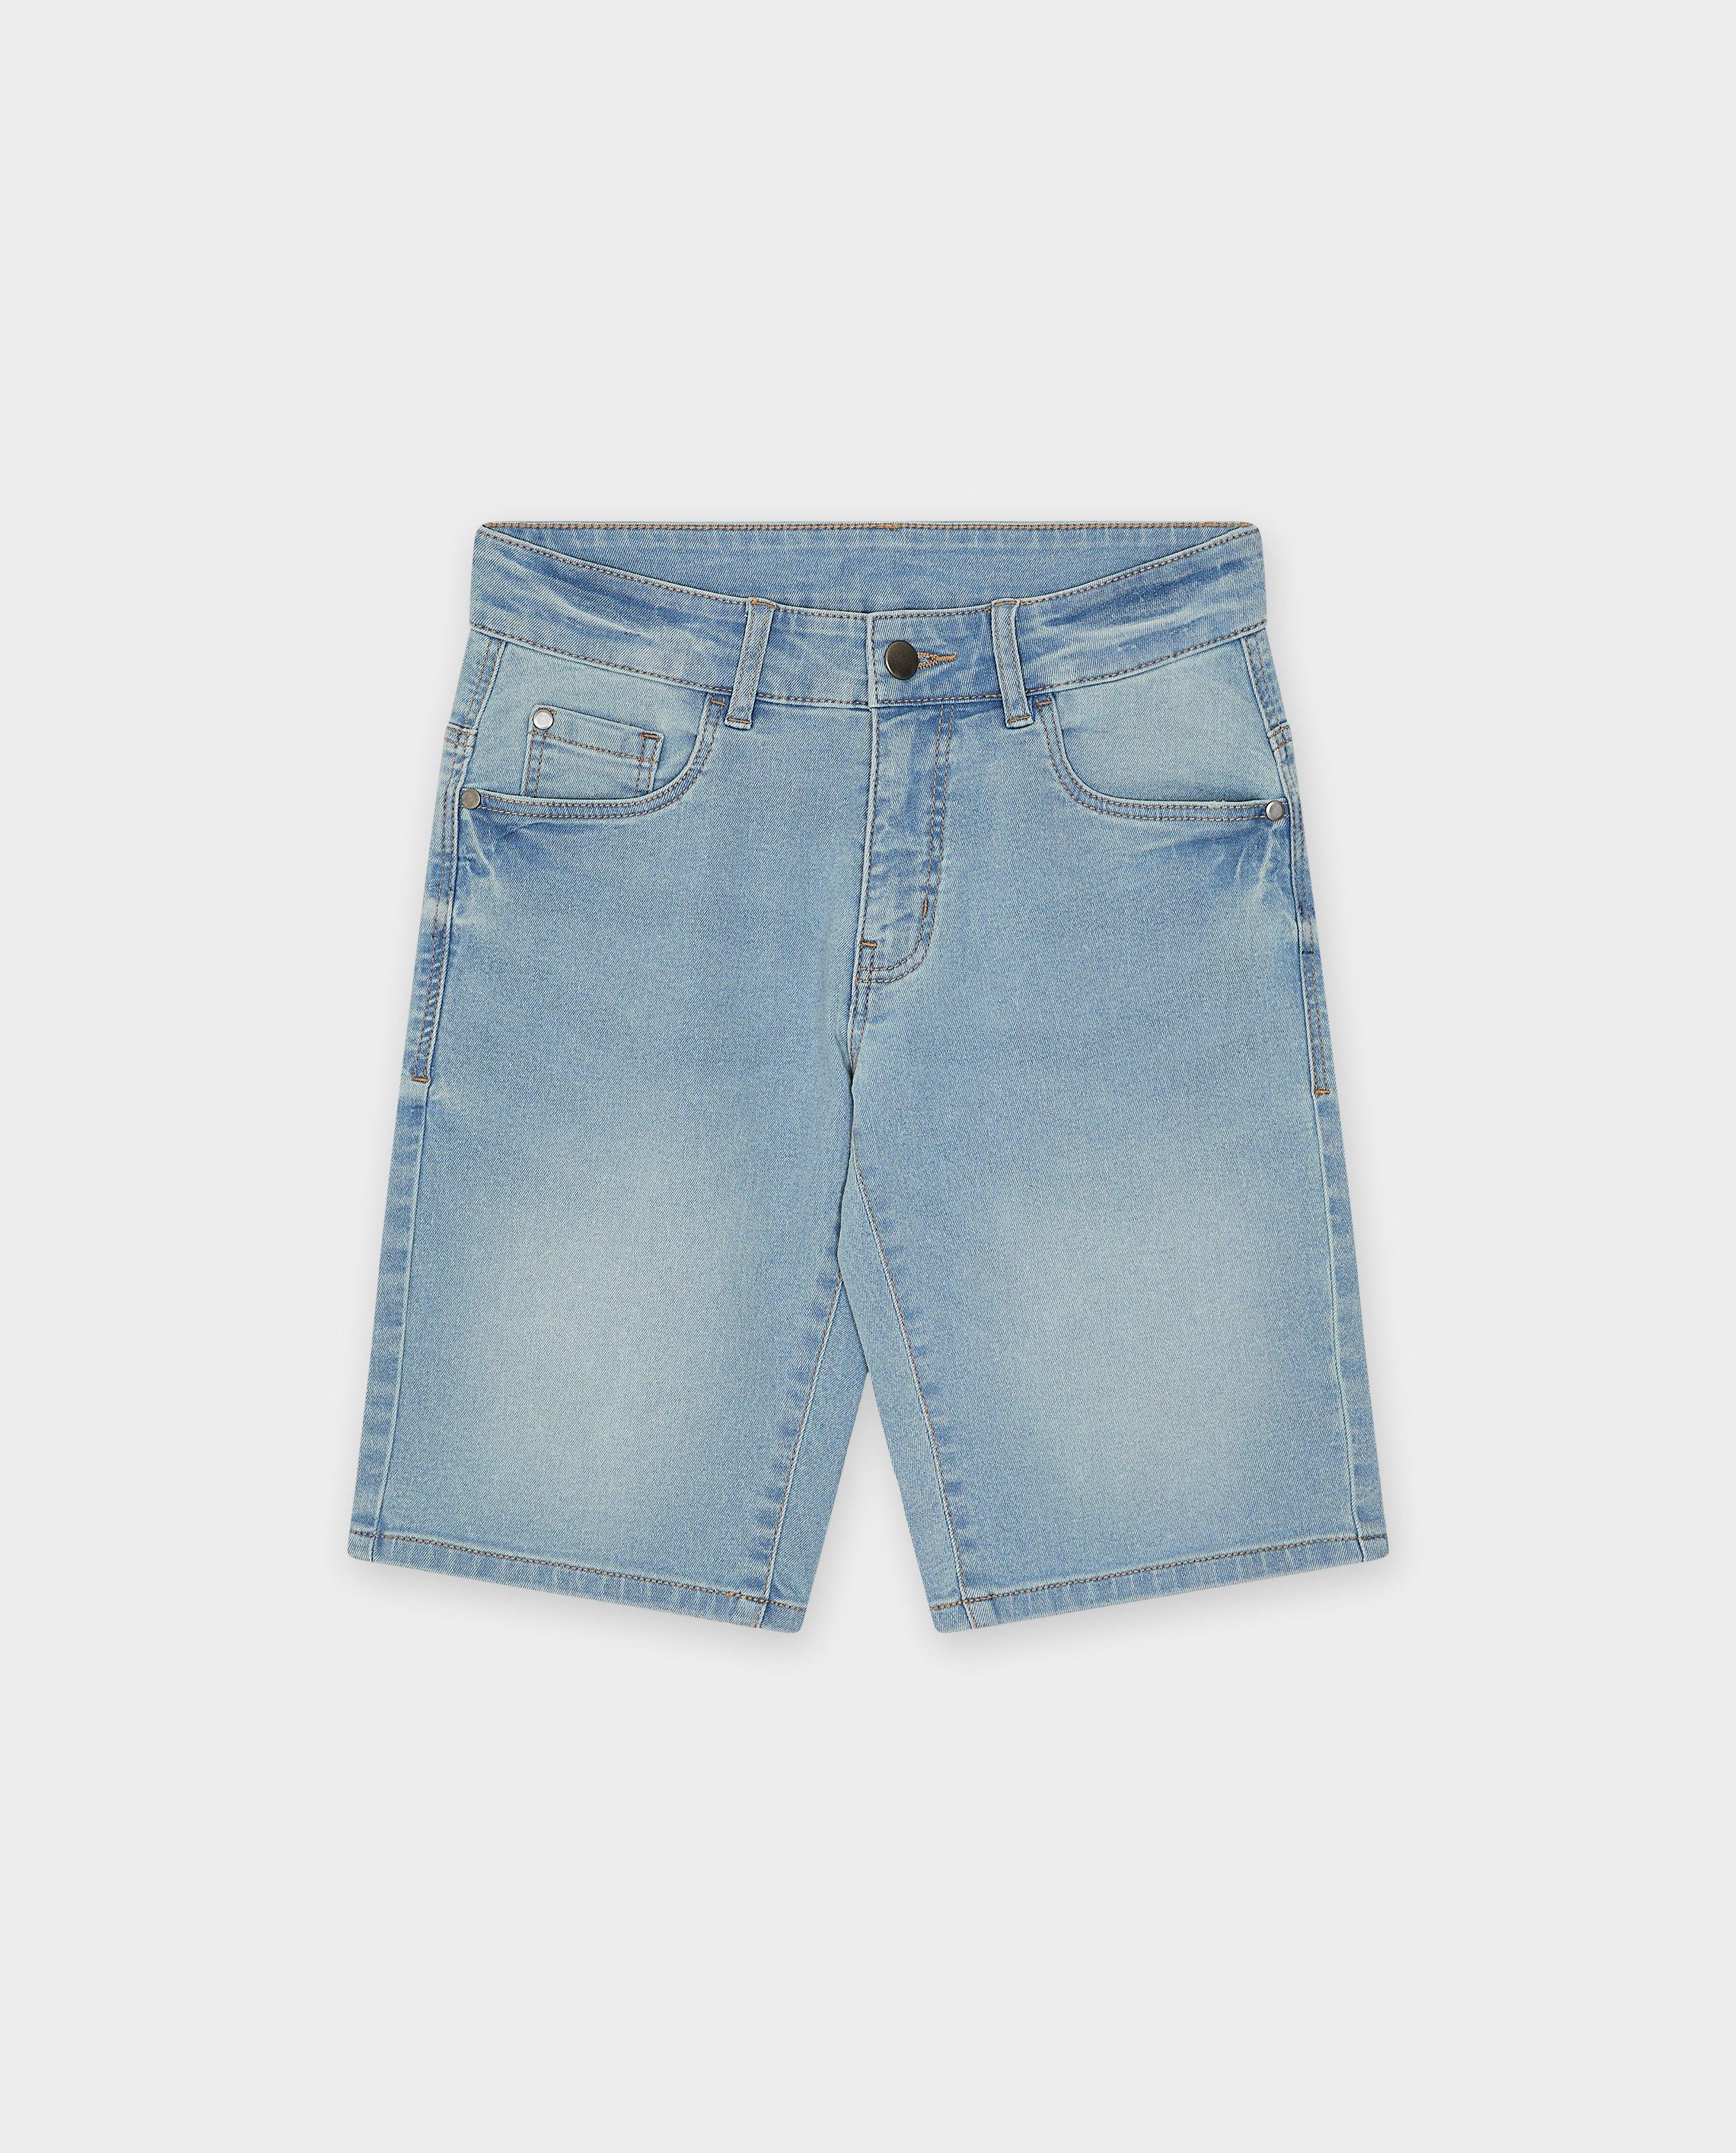 Shorts - Short en jeans bleu, regular fit